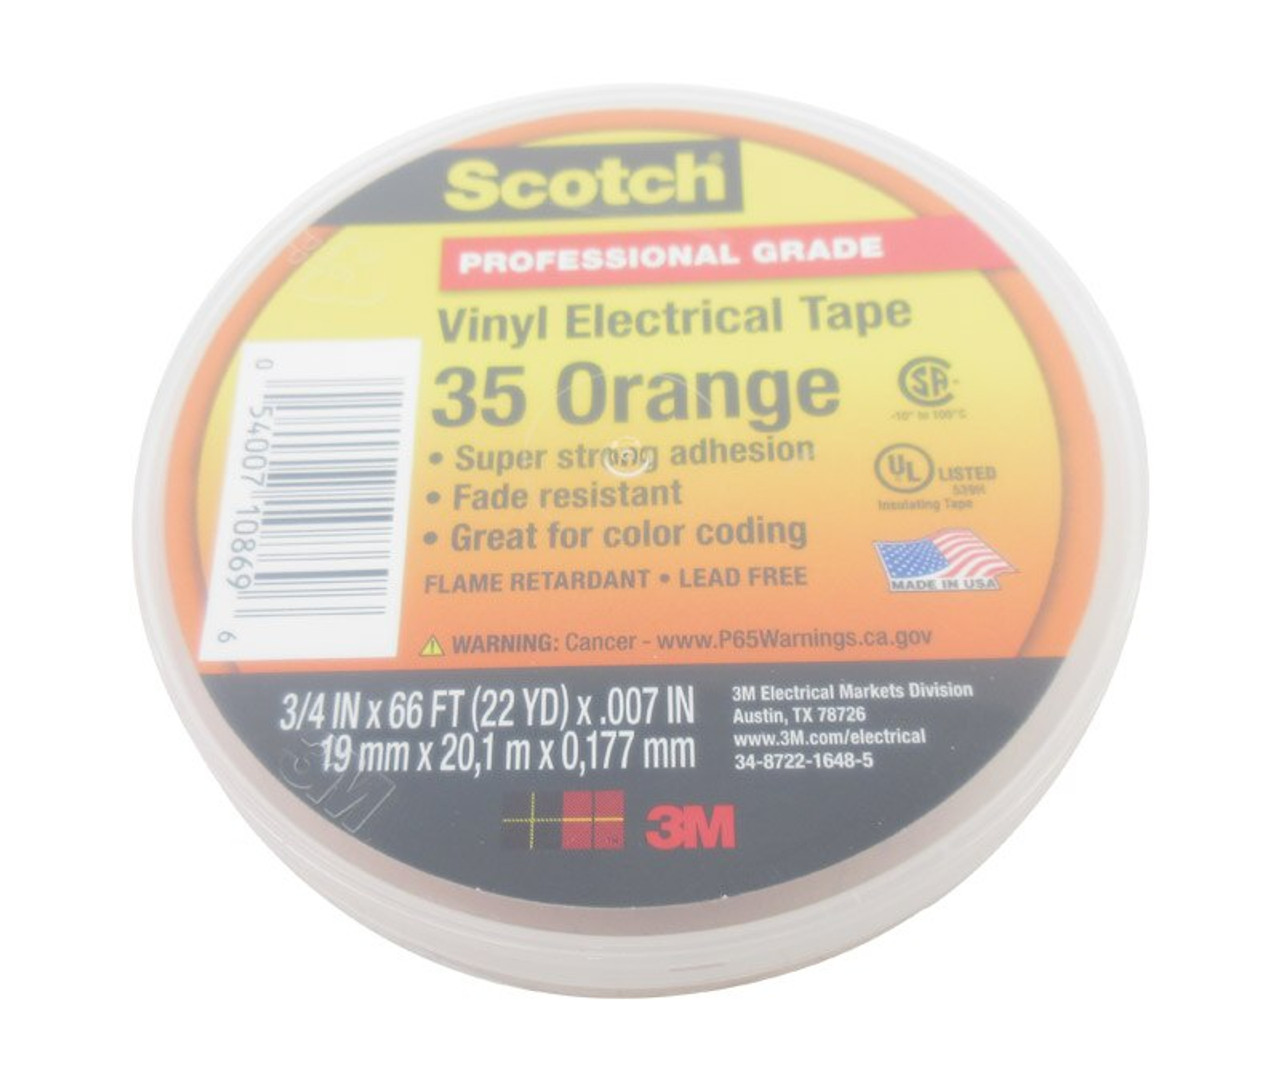 3M Scotch Professional Grade Vinyl Electrical Tape 35 - Orange